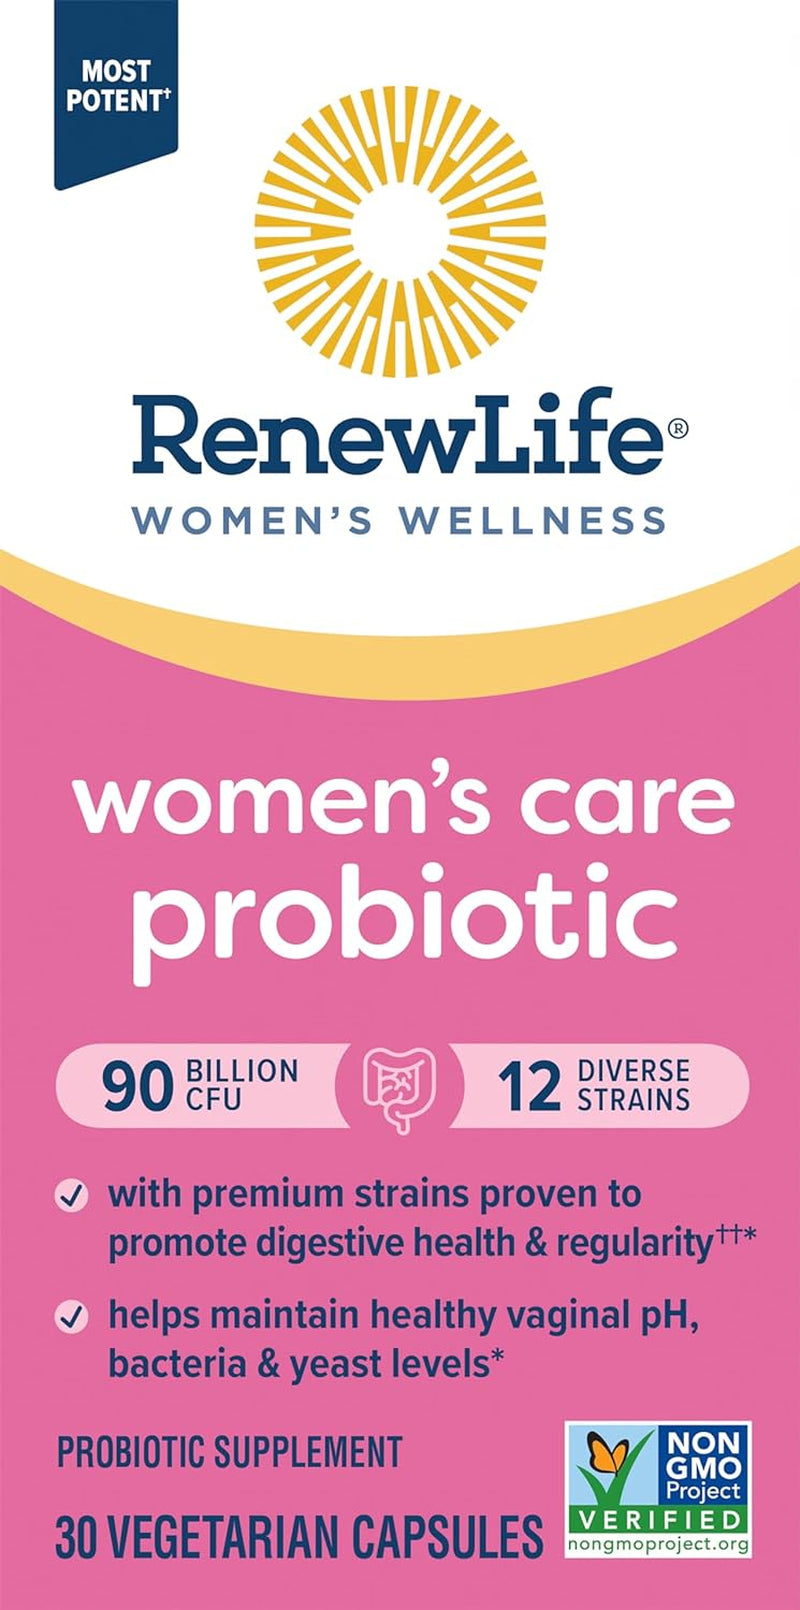 "Renew Life Women's Probiotic Capsules - 90 Billion CFU for Women's Health, Dairy-Free, Gluten-Free - 30 Count"